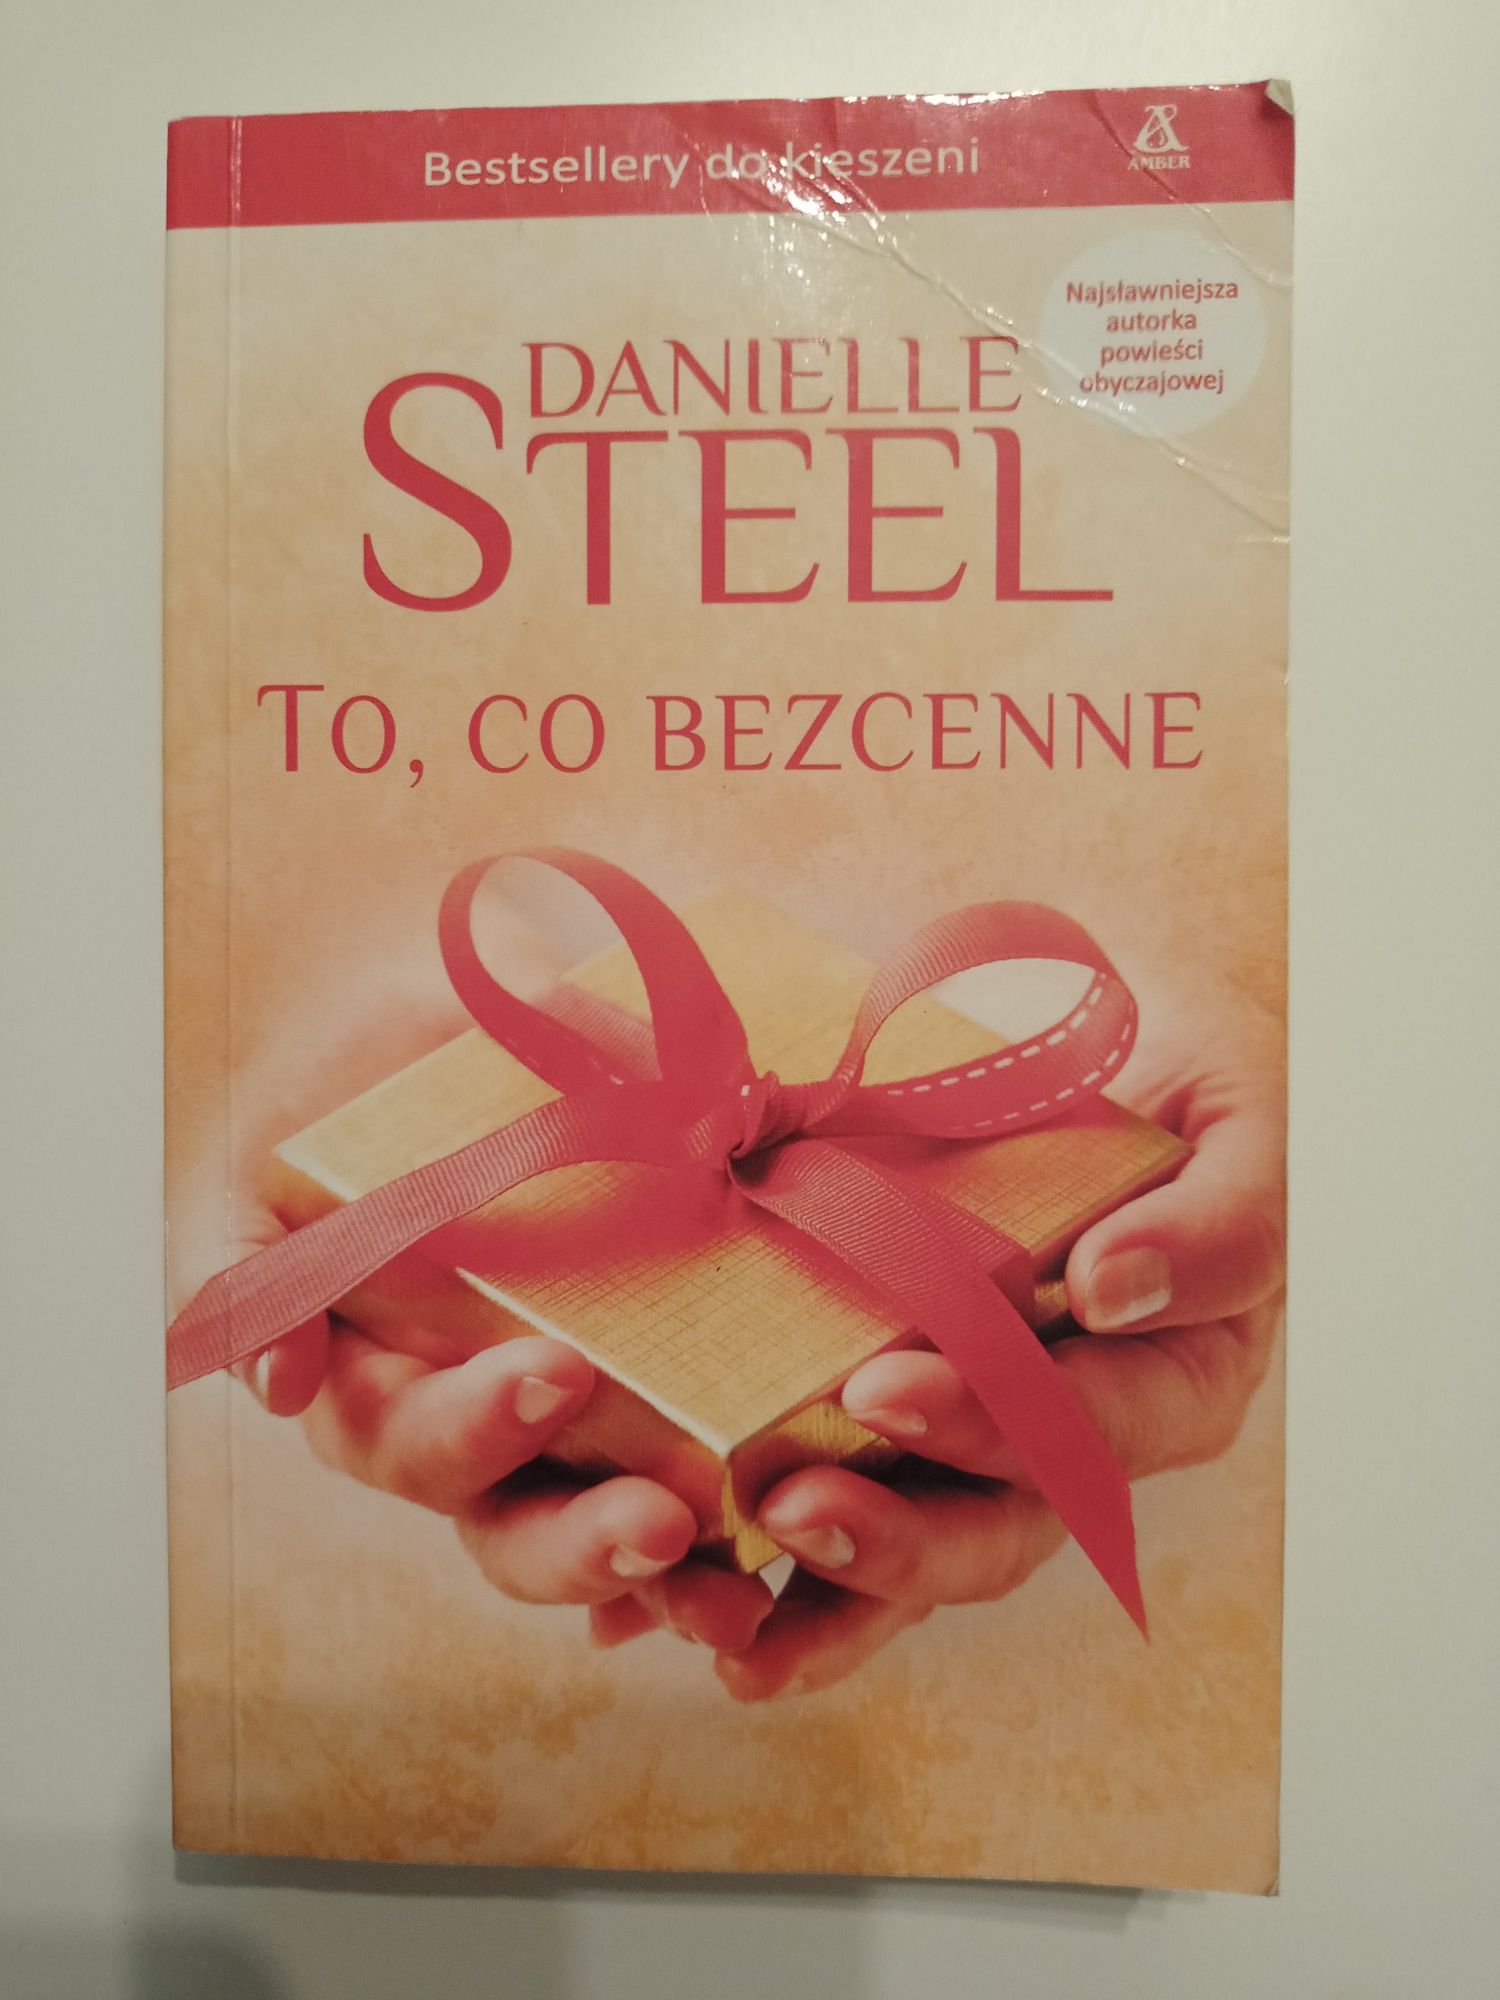 Książka " to, co bezcenne" Danielle Steel, wersja kieszonkowa